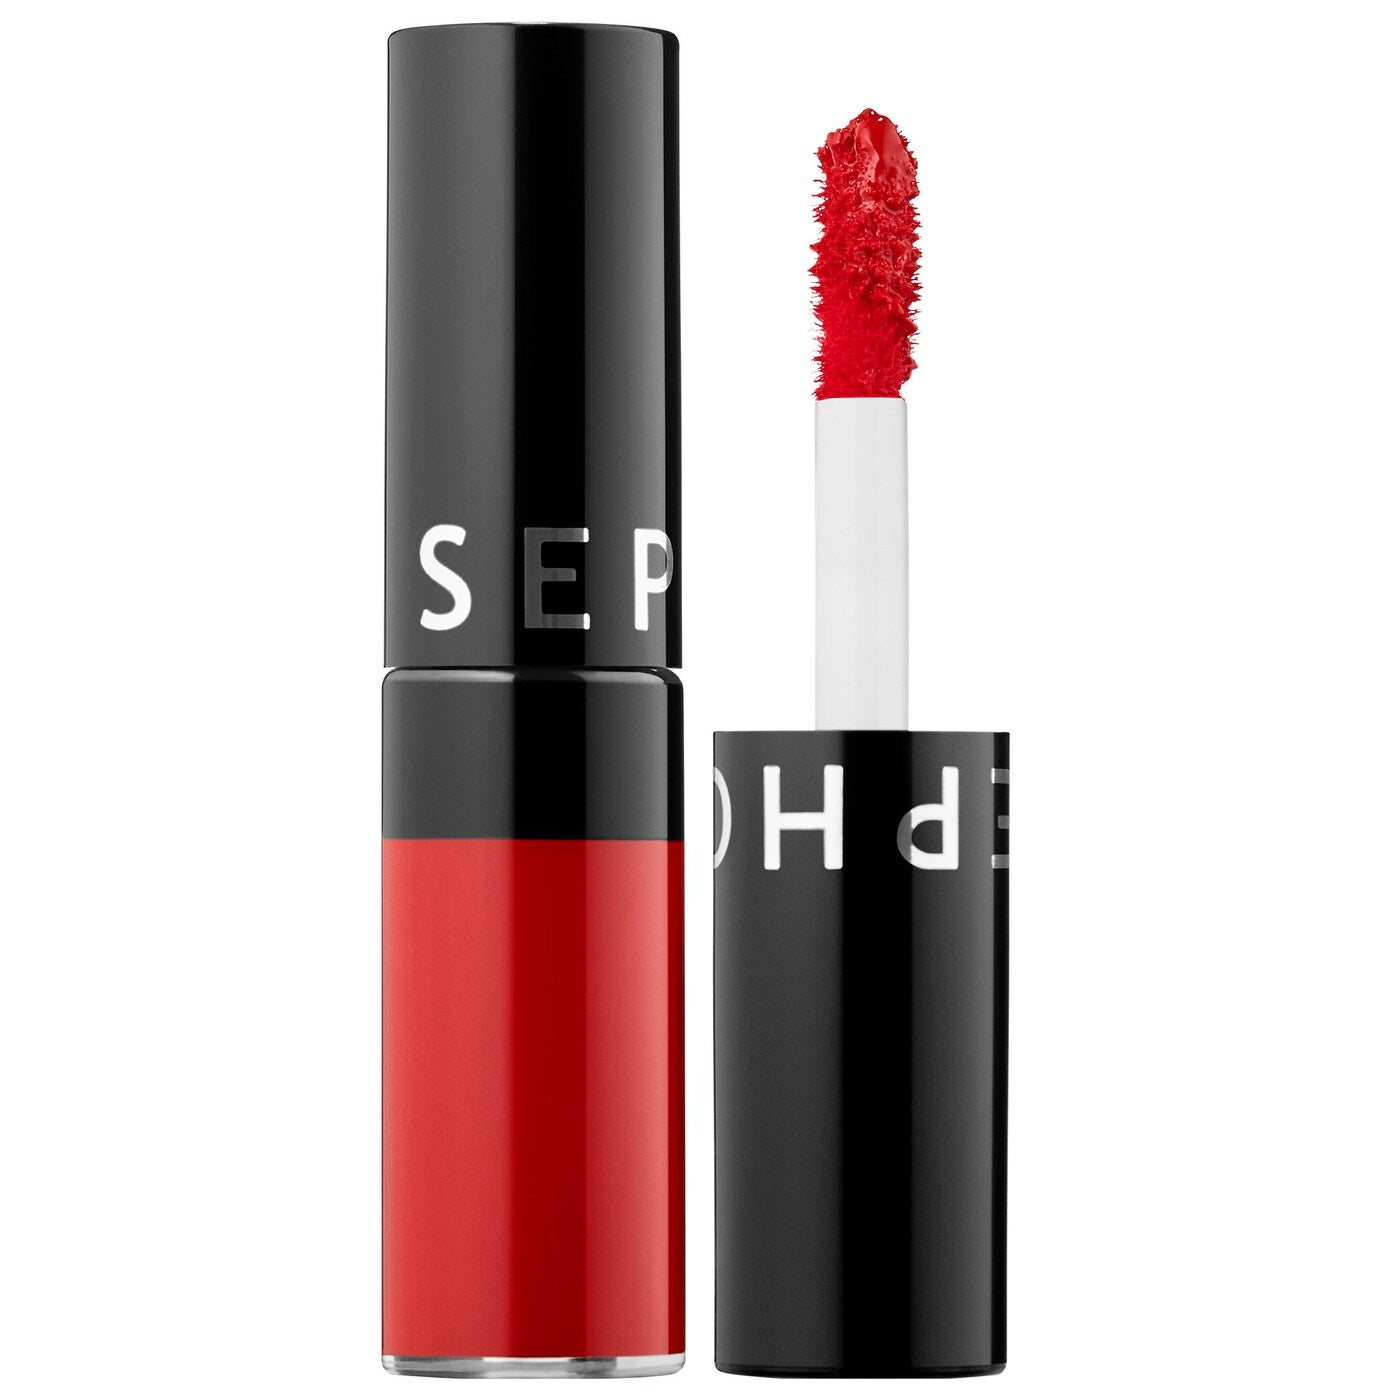 Sephora Cream Lip Stain in #01 Always Red - MINI SIZE